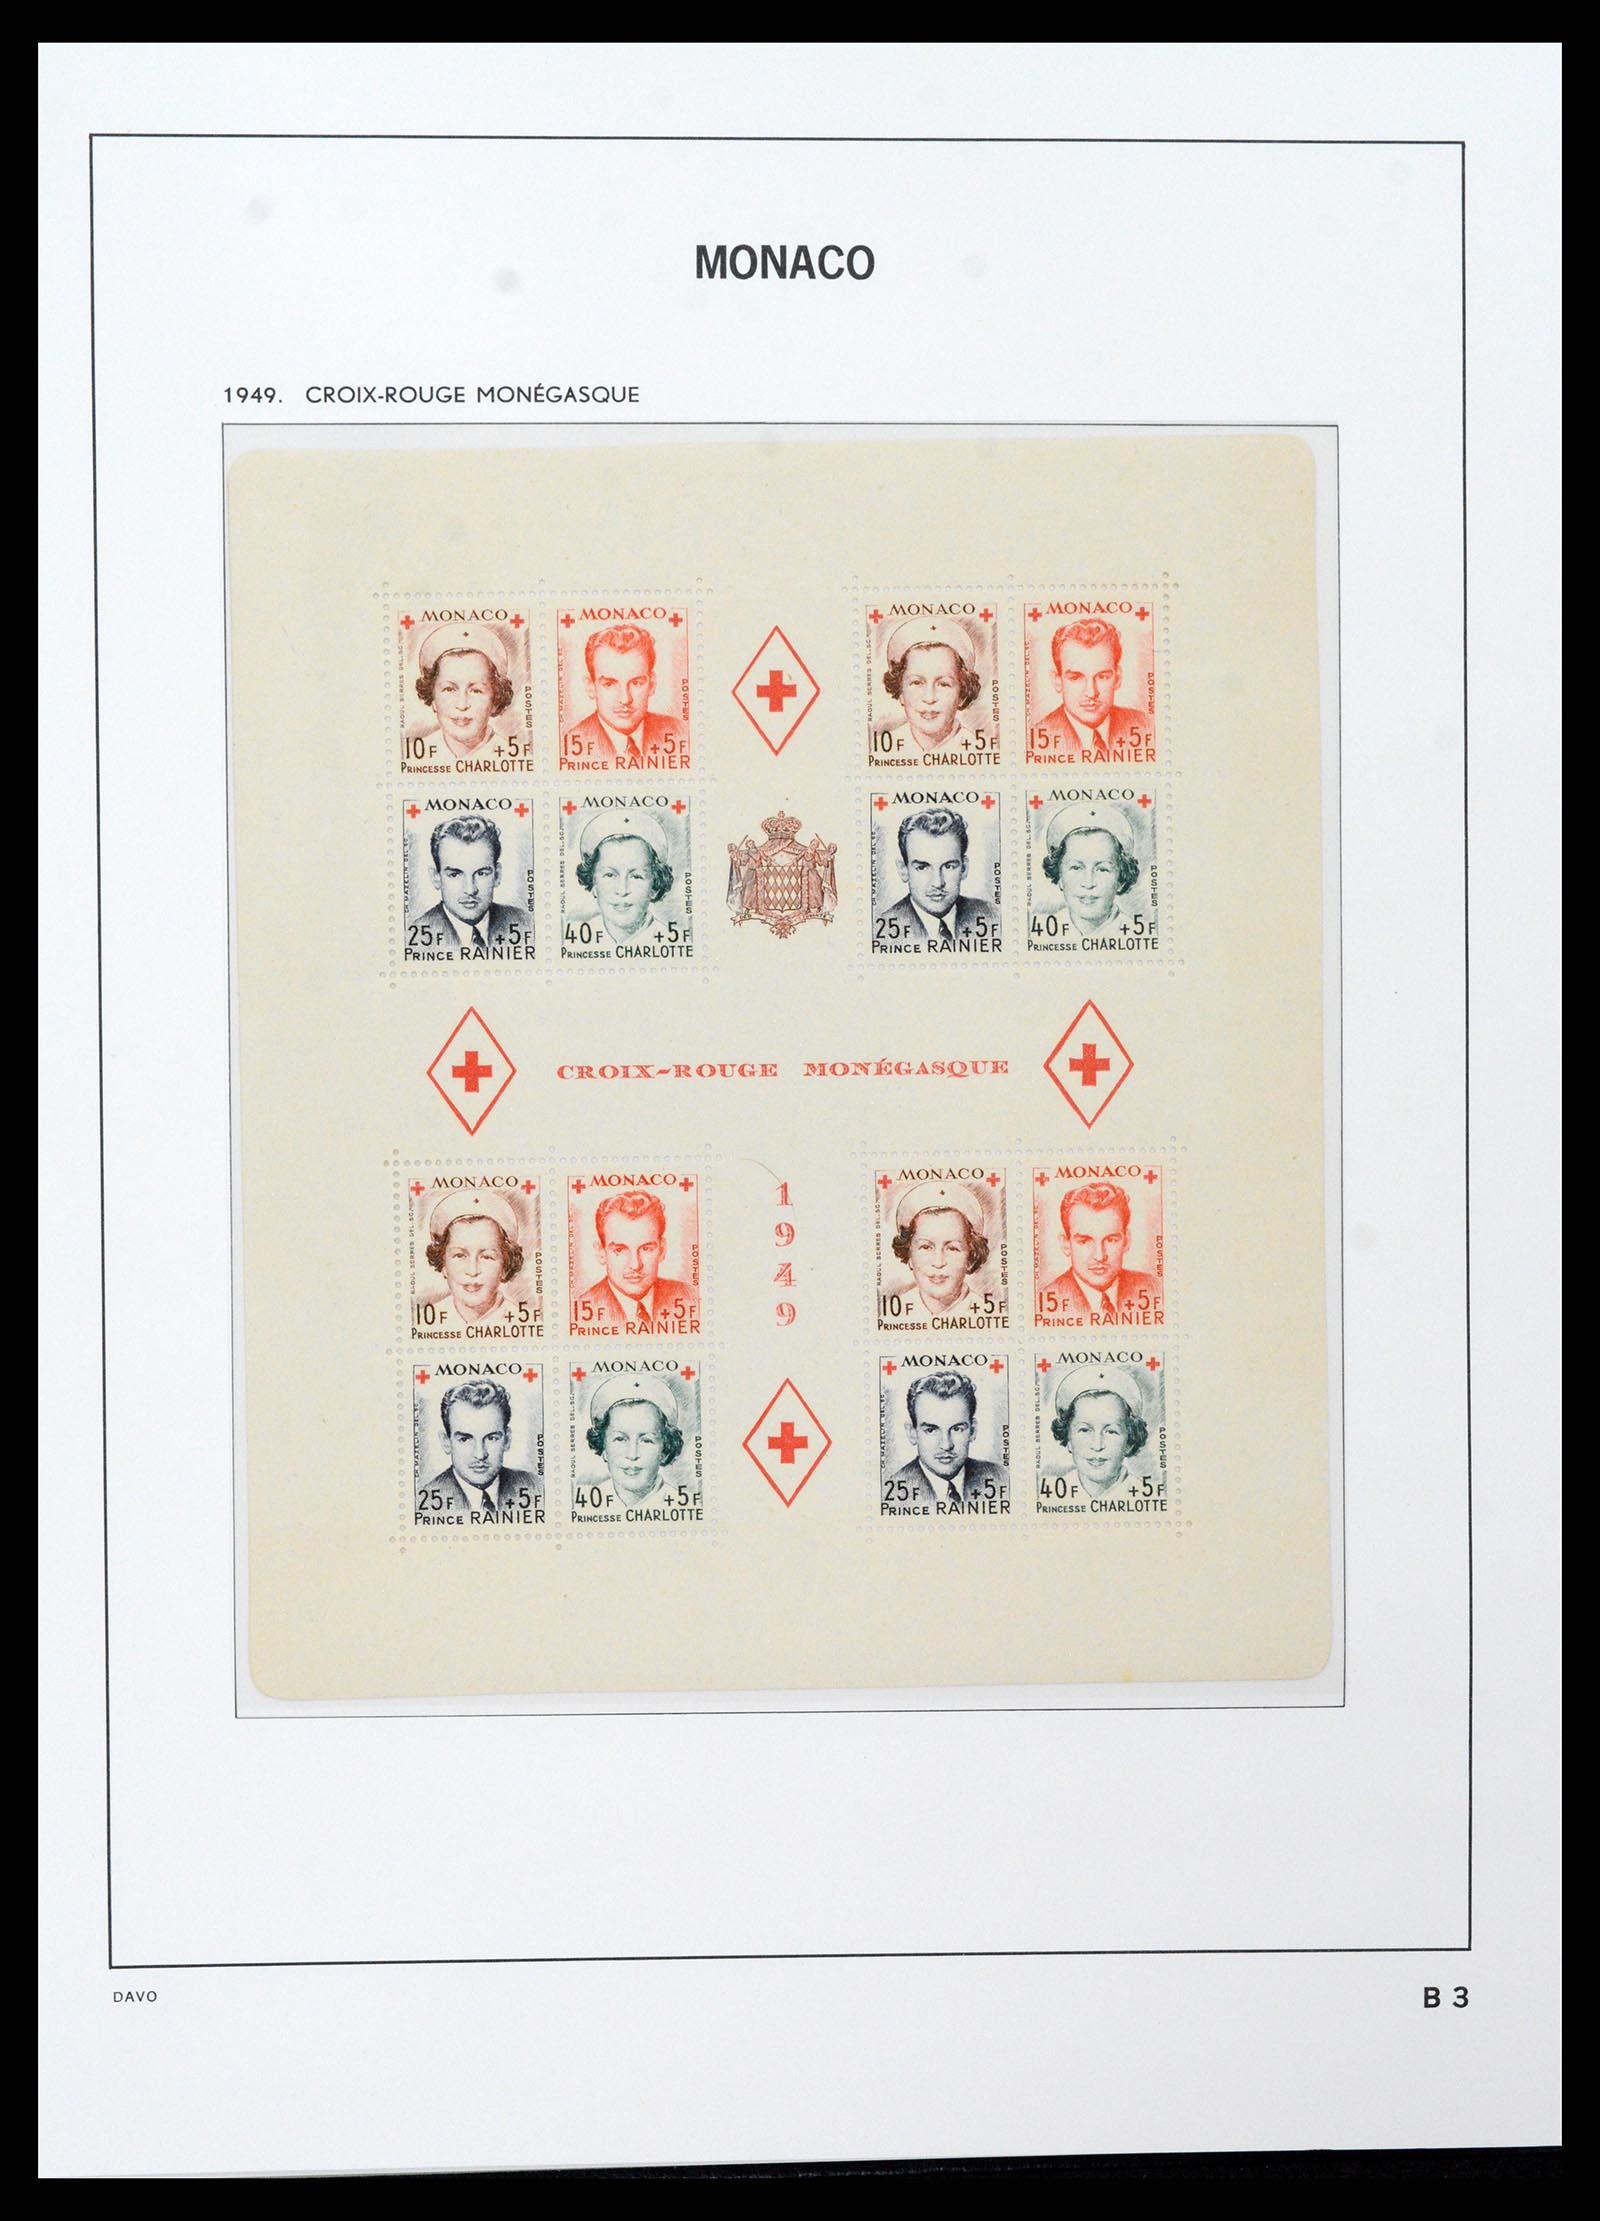 37279 069 - Stamp collection 37279 Monaco 1885-1969.